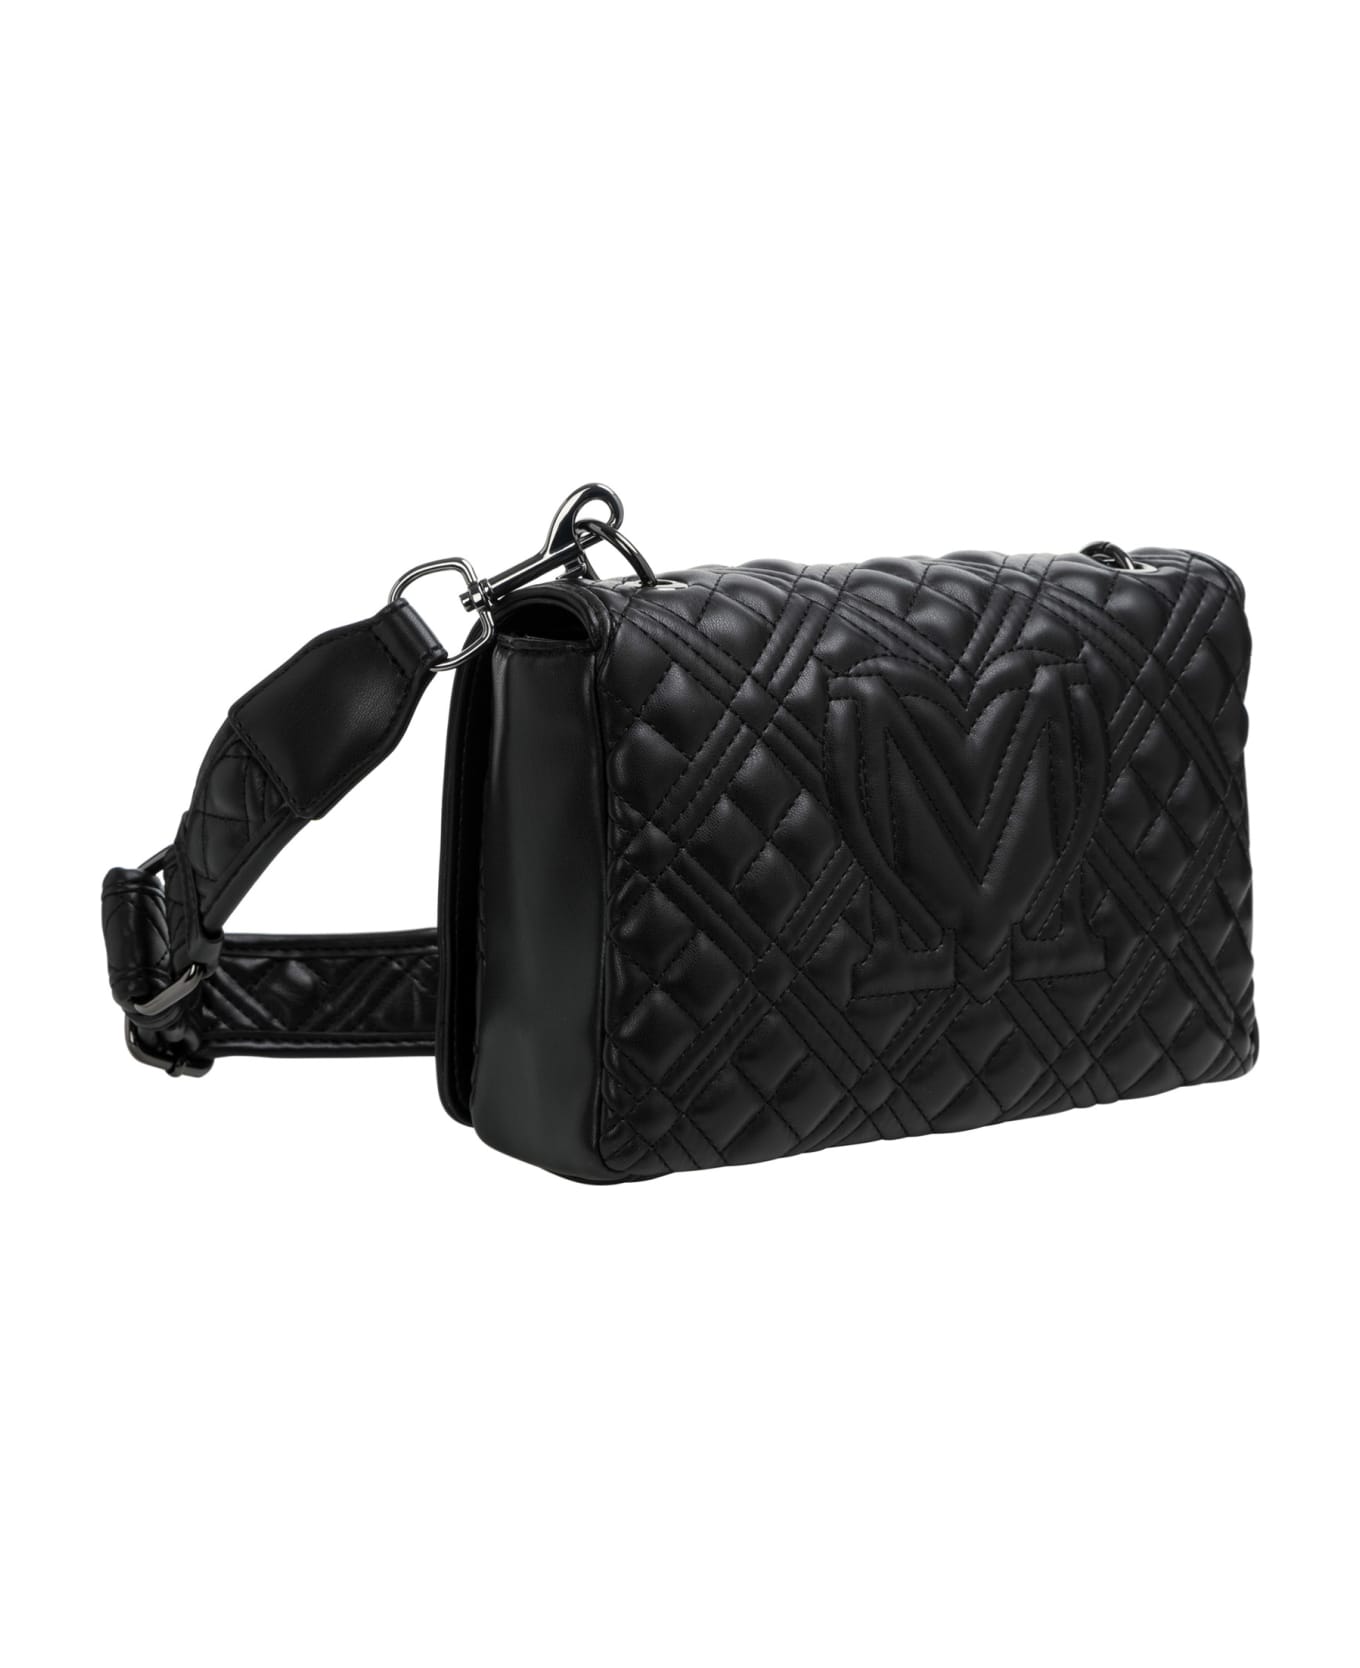 Love Moschino Shoulder Bag - A Nero